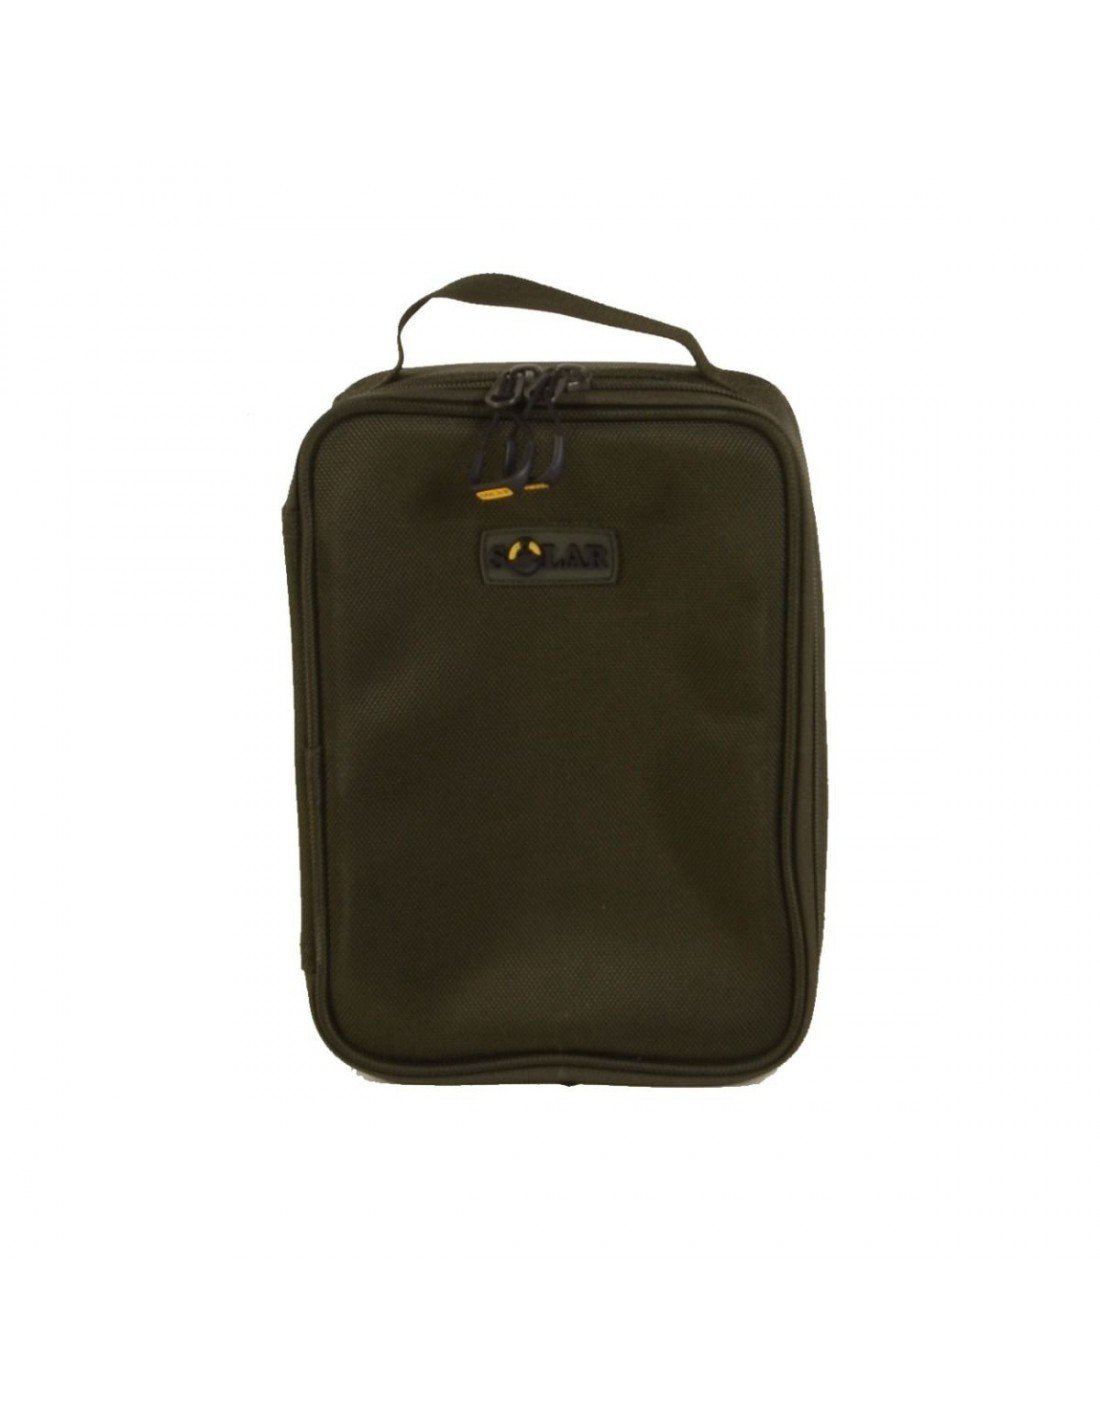 SOLAR SP Hard Case Accessory Bag - Medium чанта за аксесоари